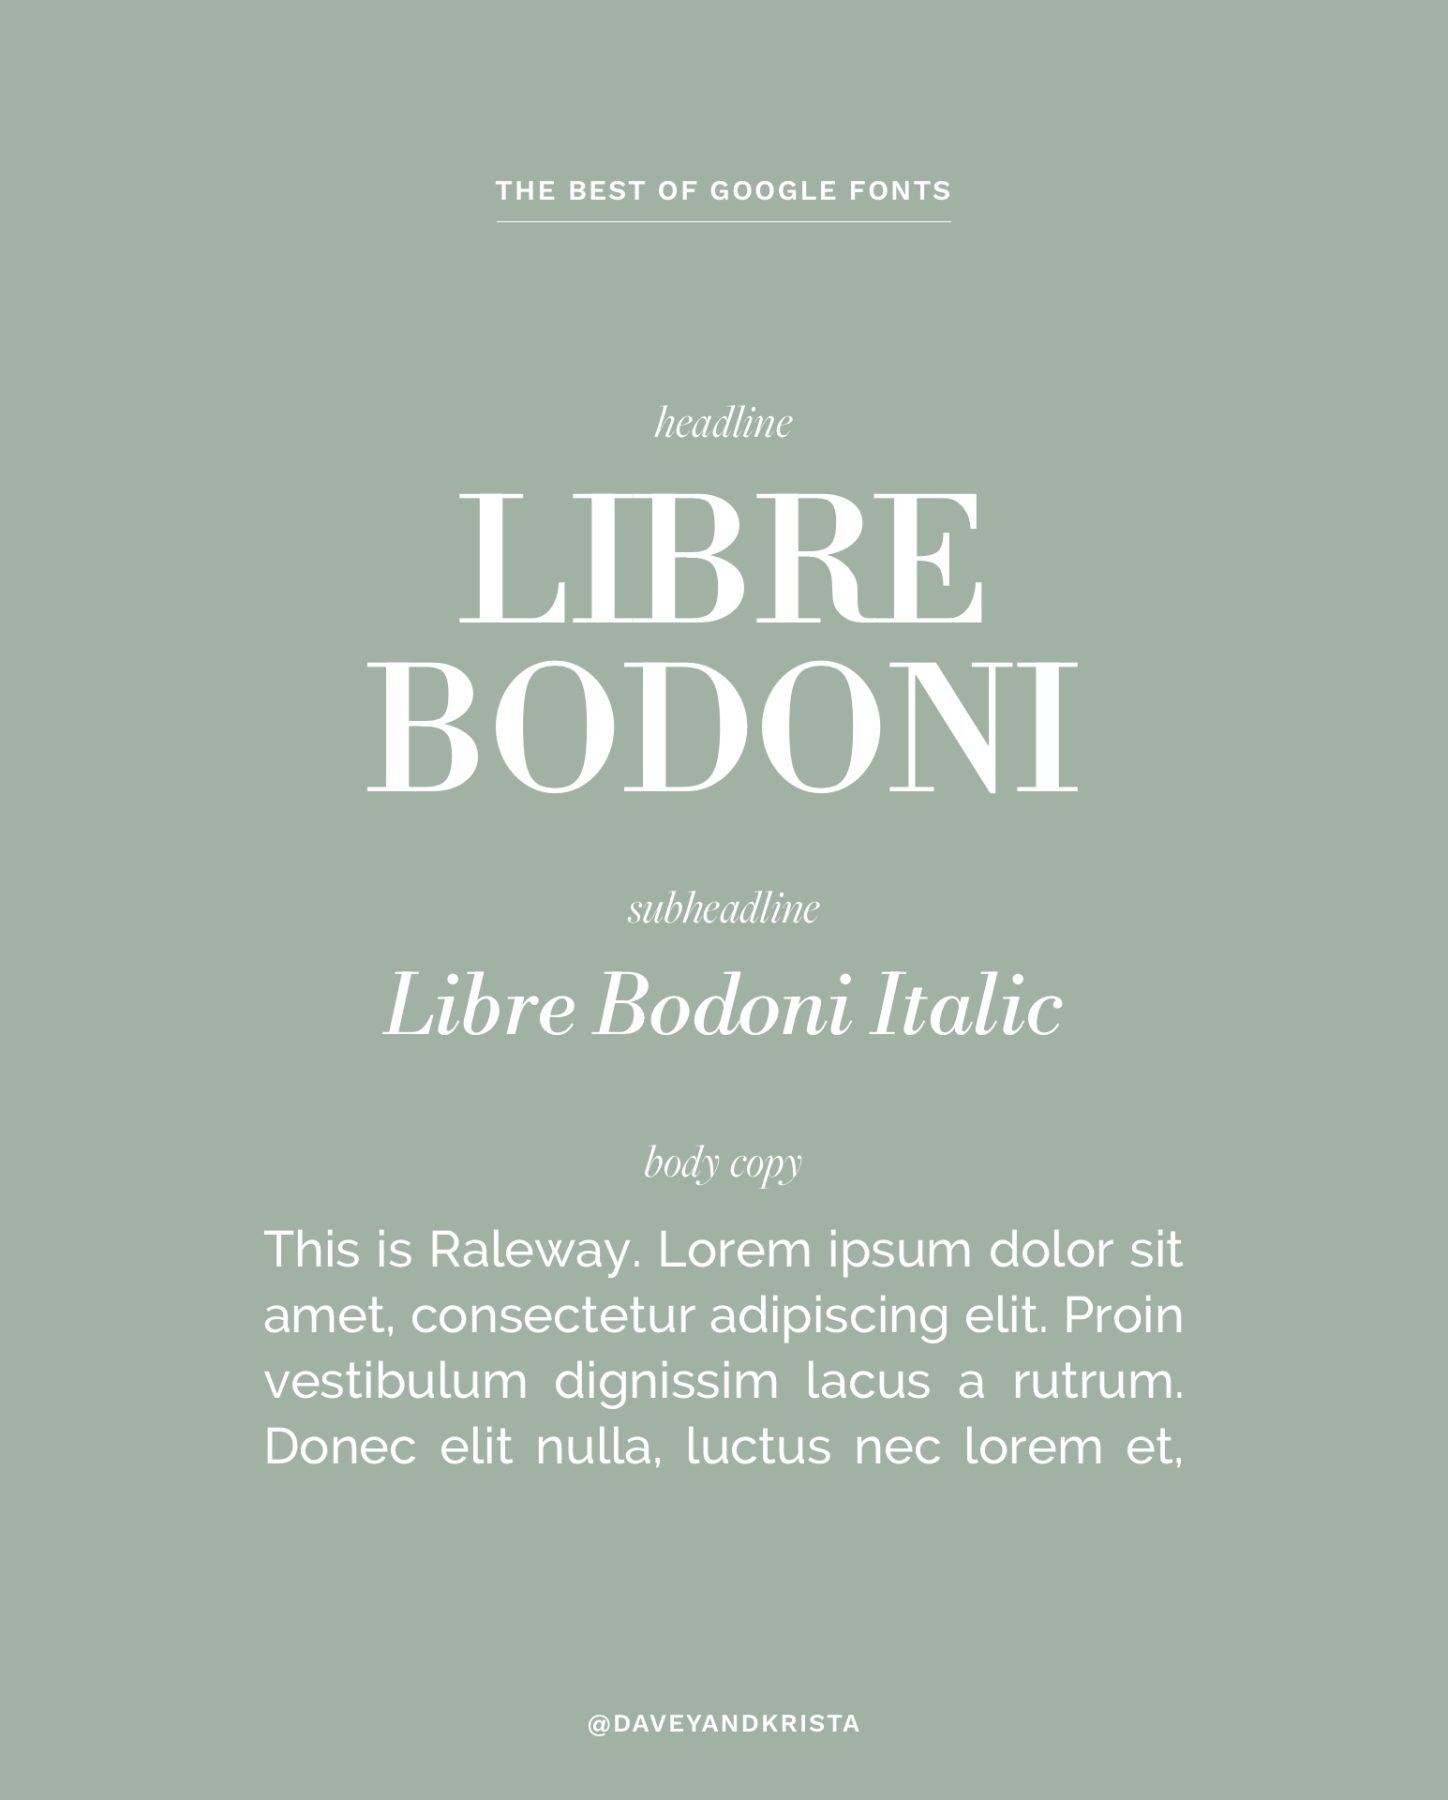 The best of Google Fonts: Libre Bodoni + Raleway | Via Davey & Krista
